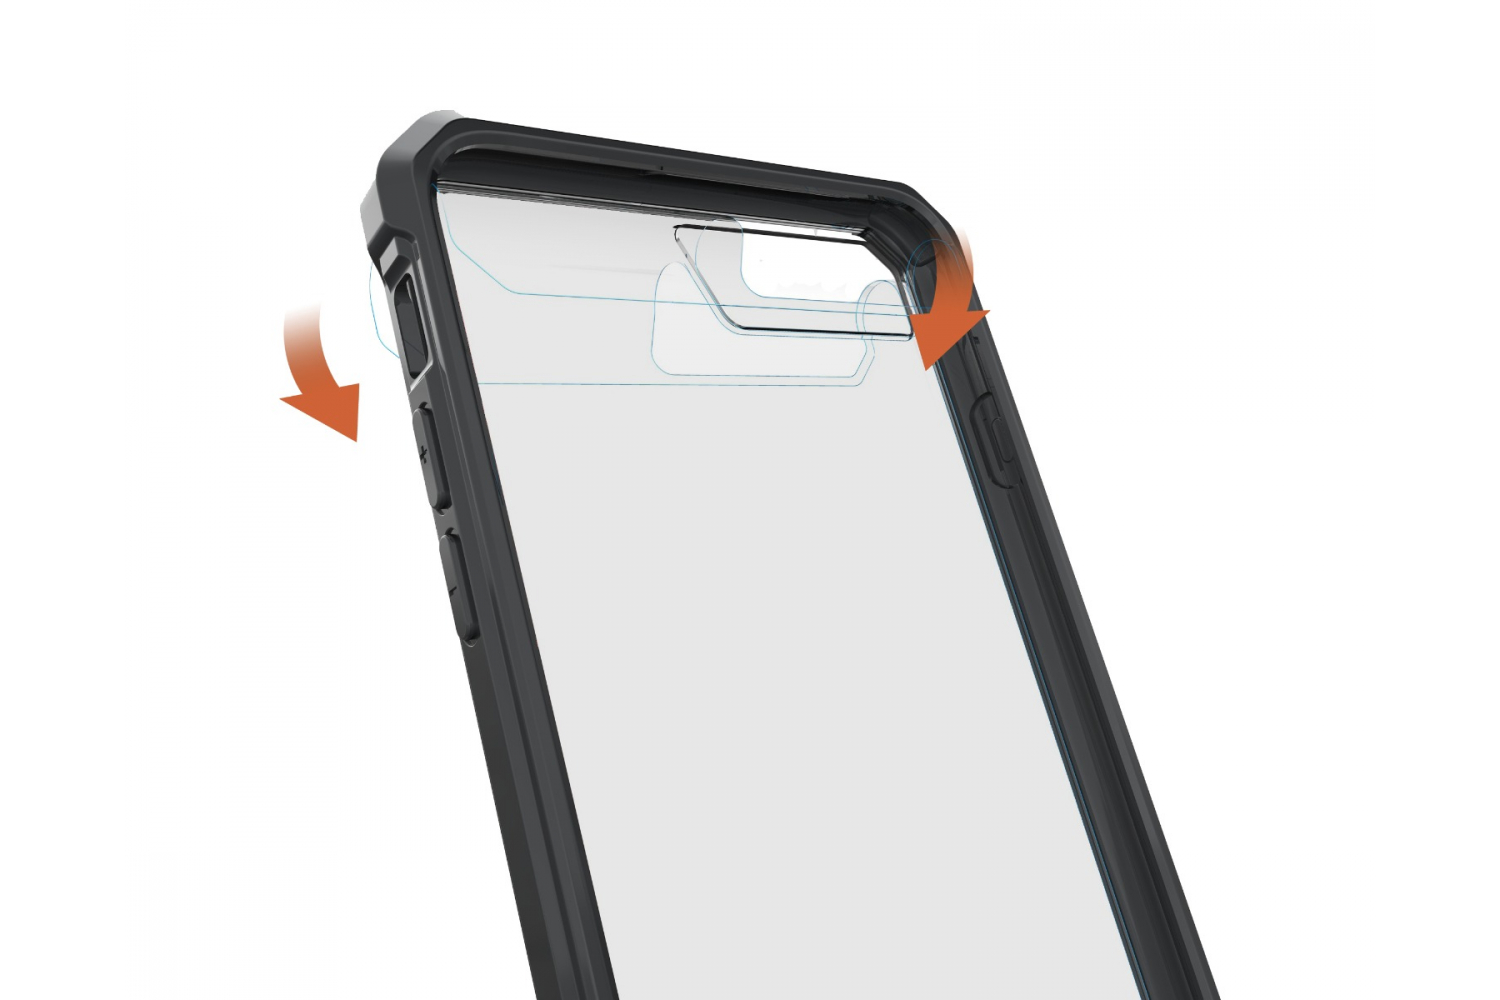 Iphone 7 Plus Back cover Transparant Air Hybrid Zwart